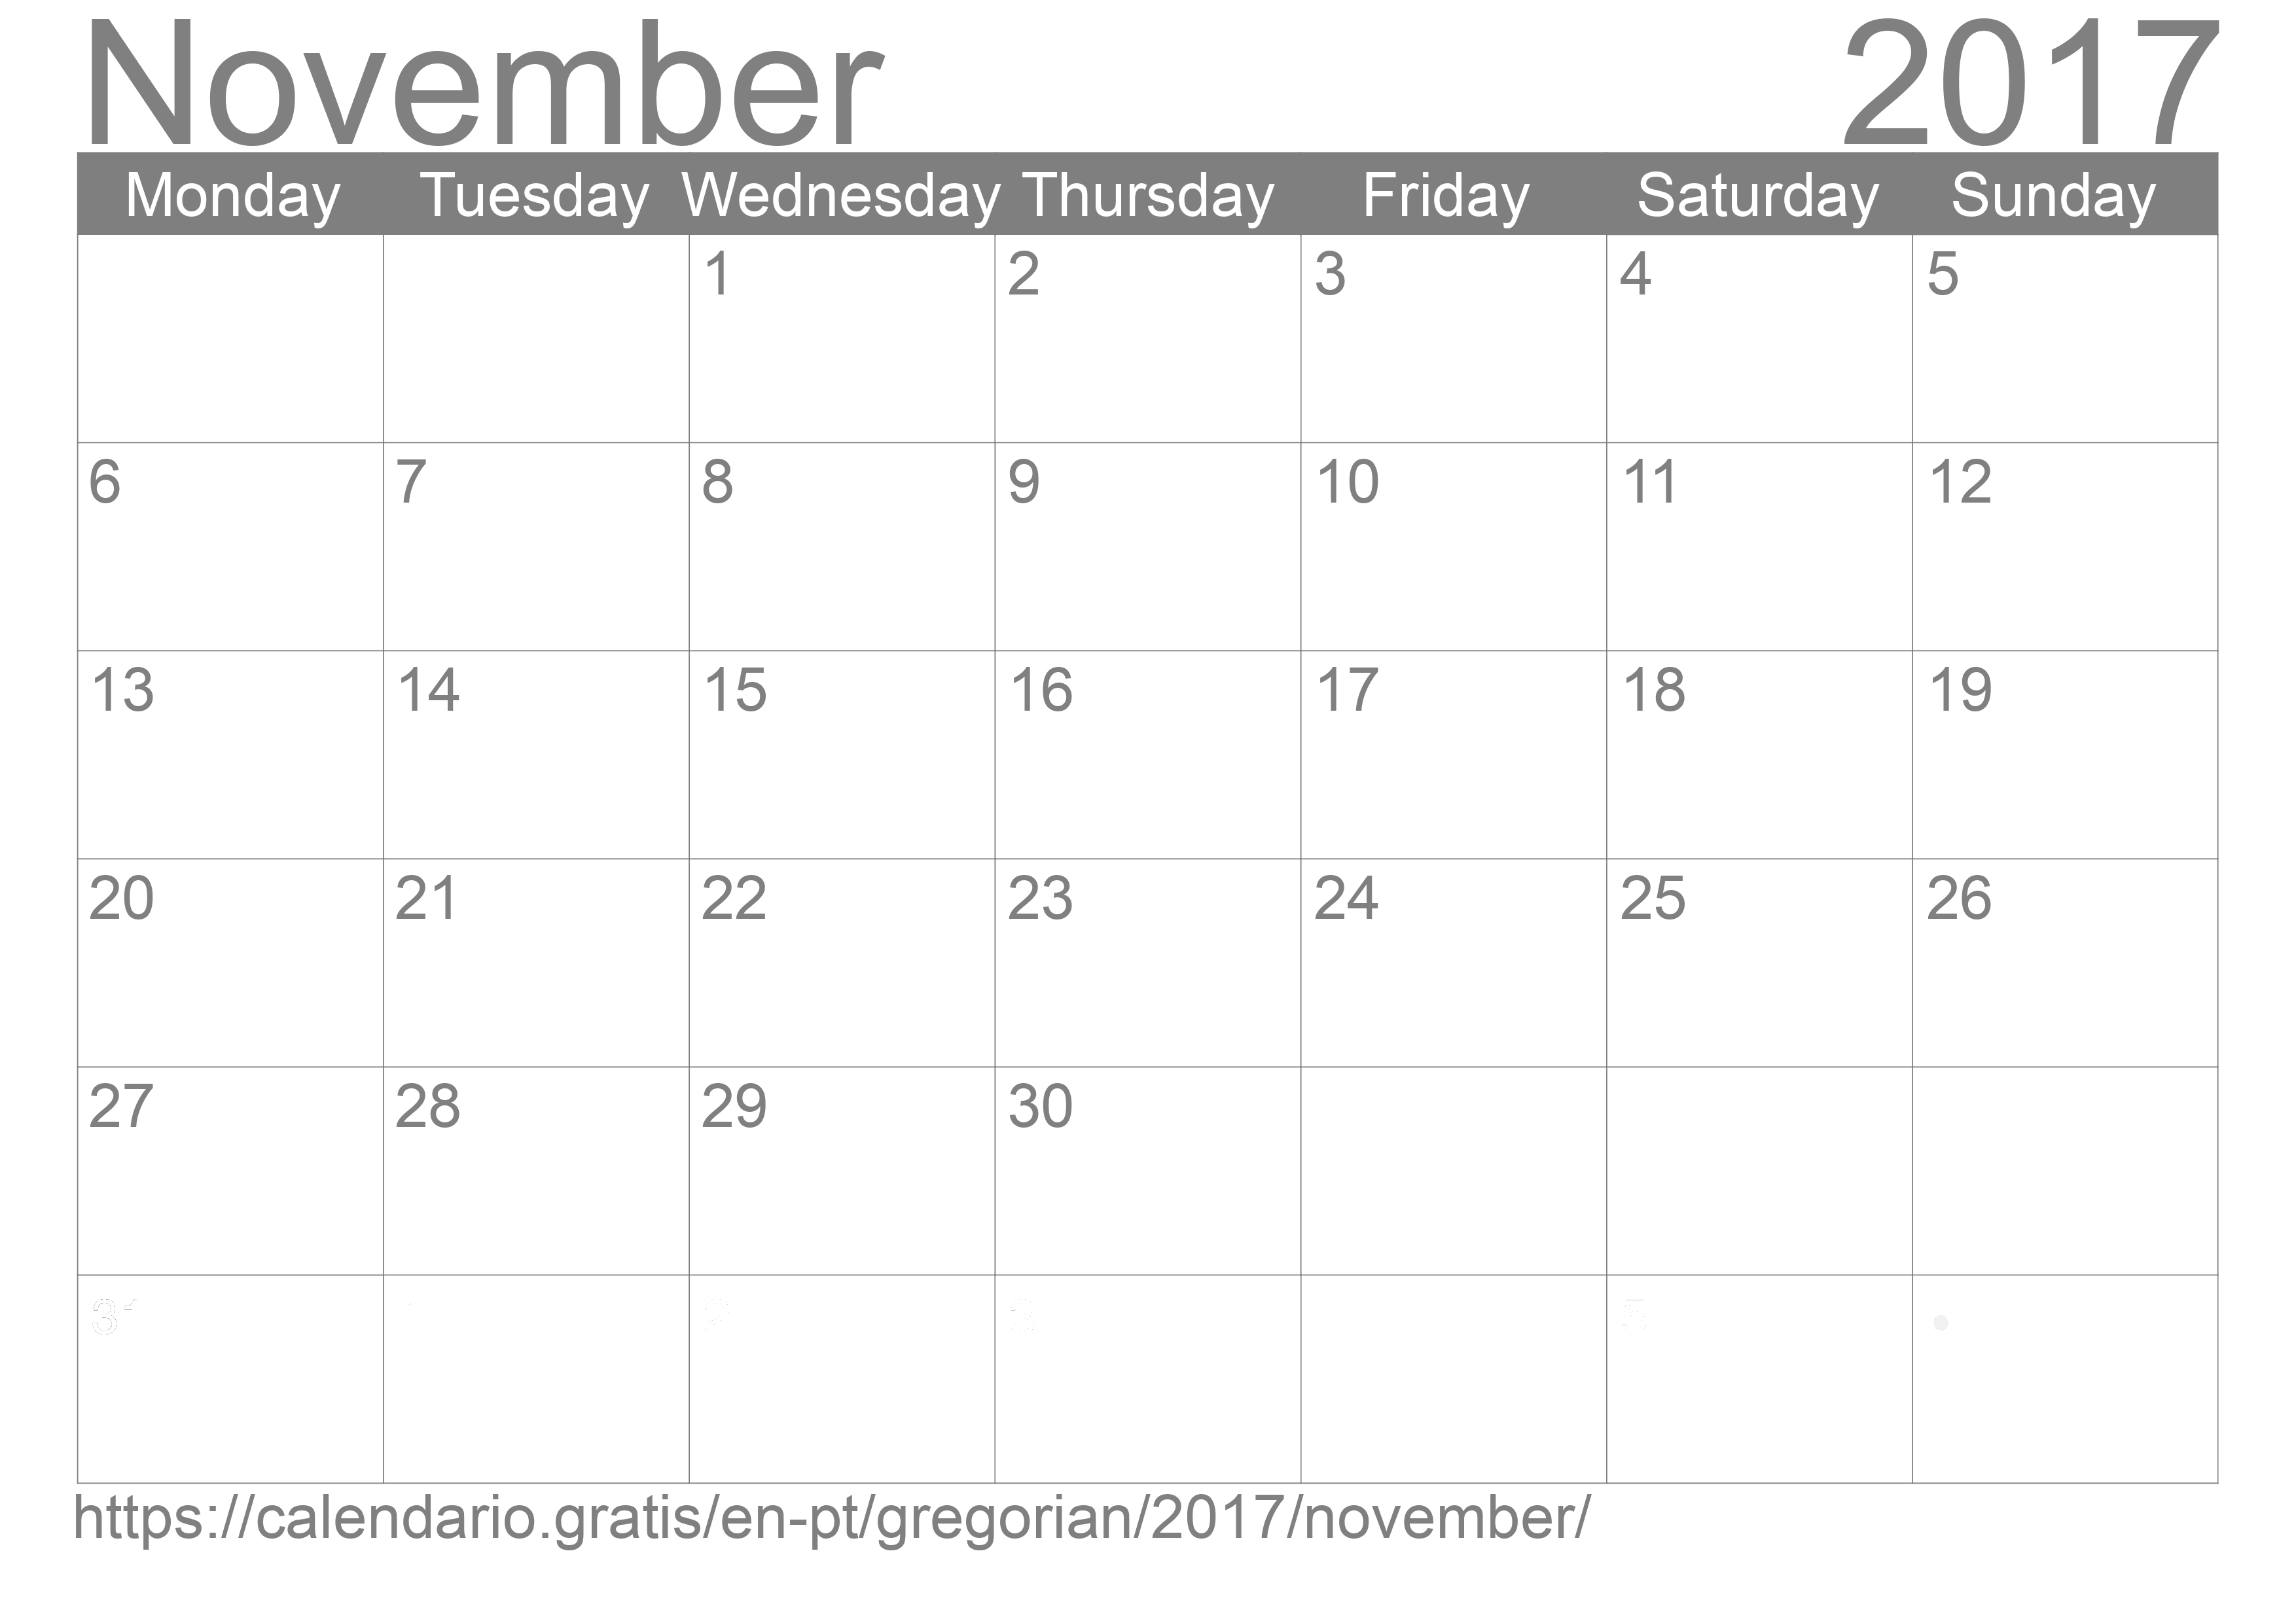 Calendar November 2017 to print